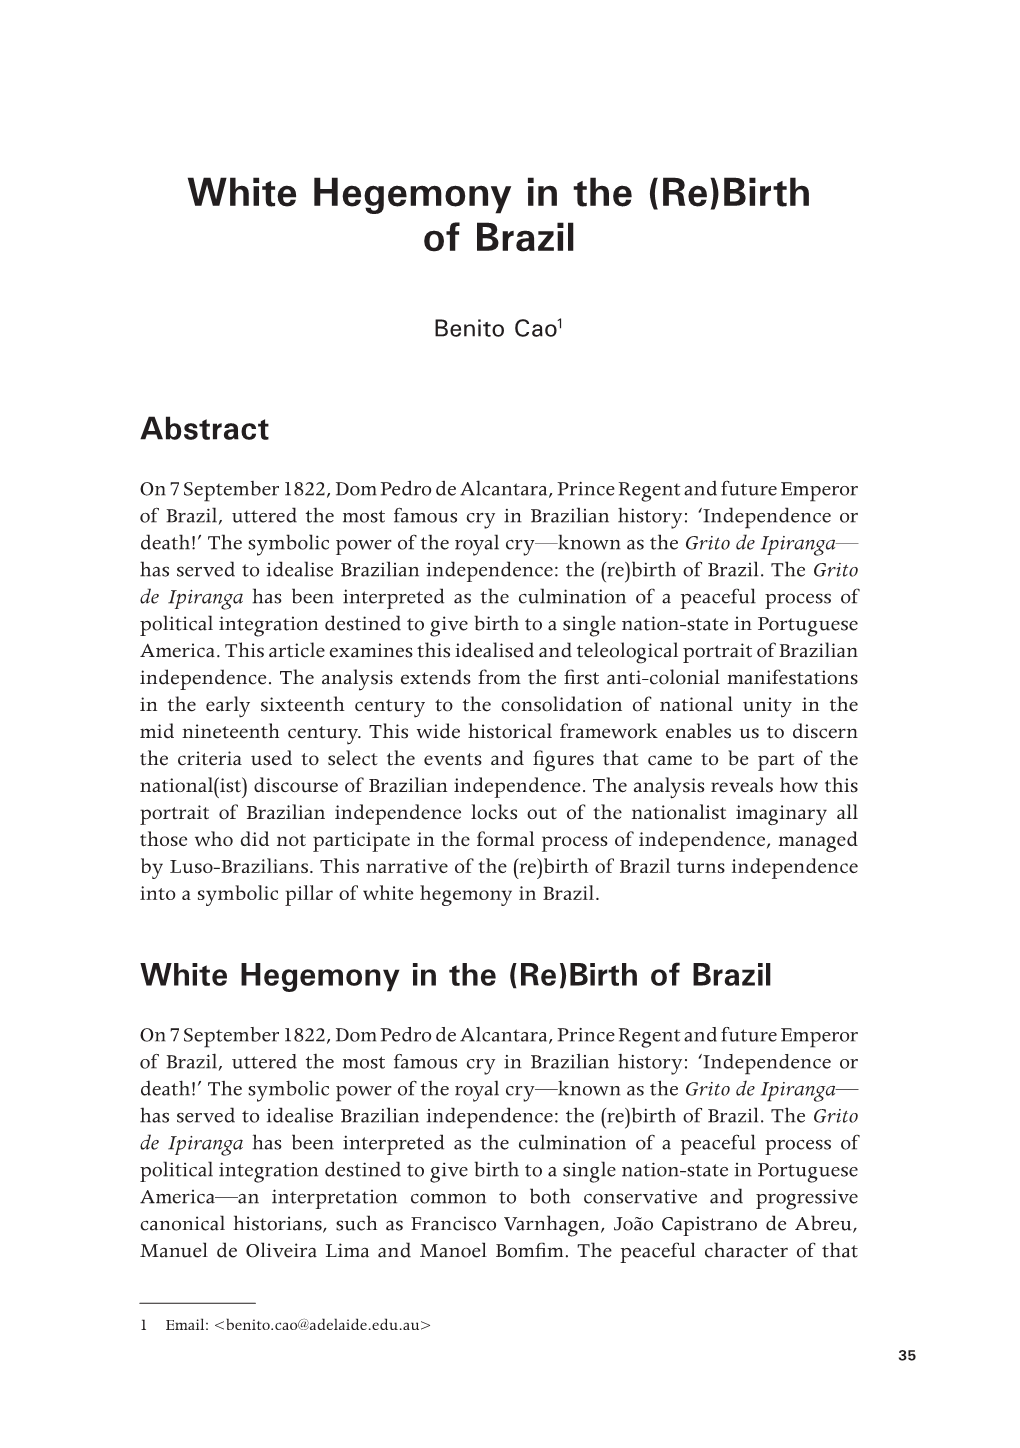 White Hegemony in the (Re)Birth of Brazil